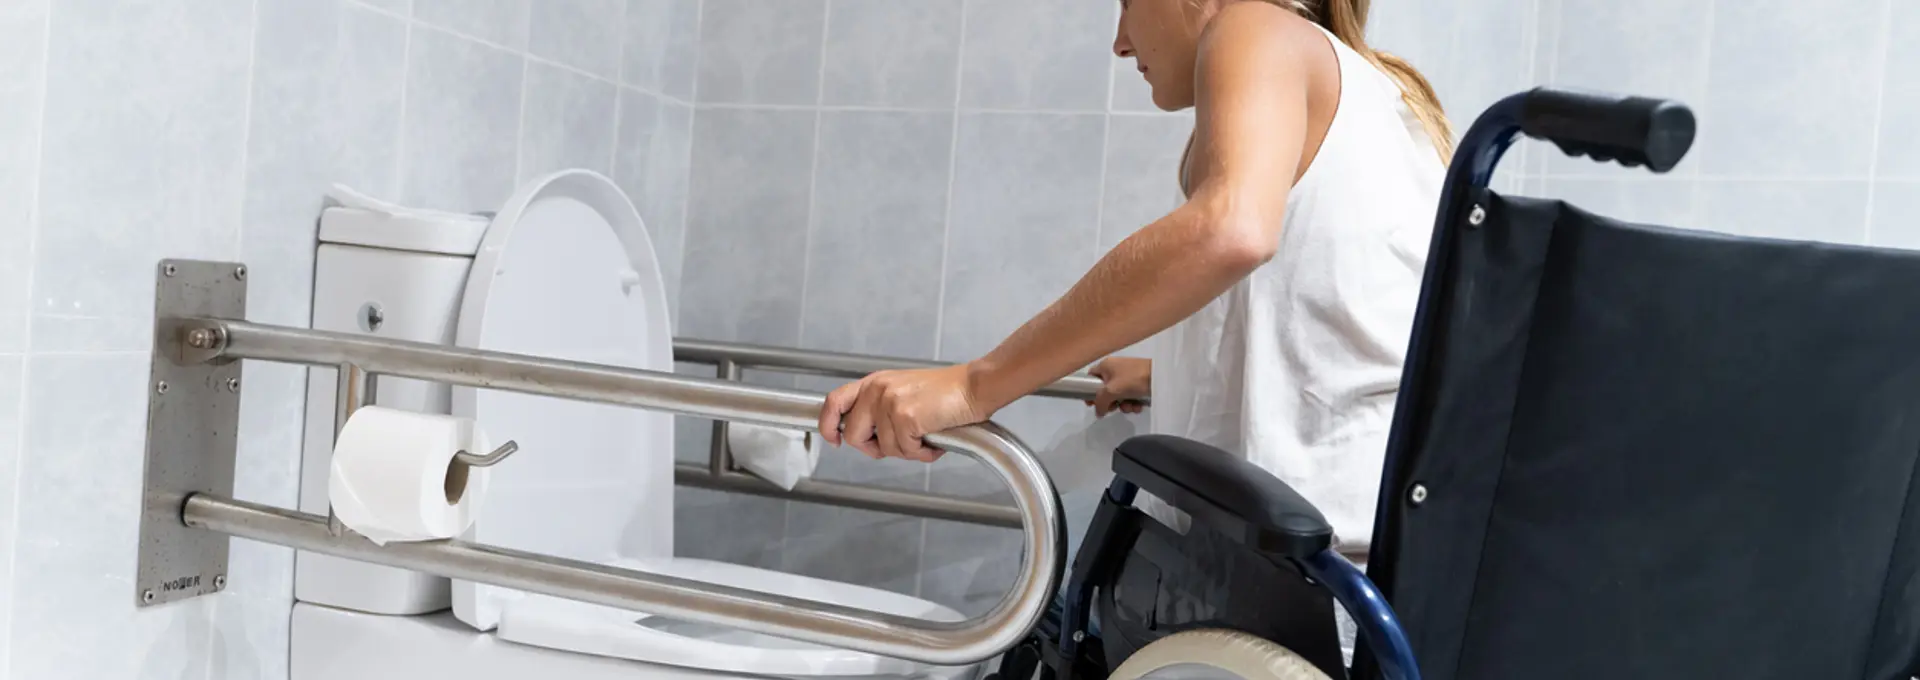 Women in wheelchair using grab rails - stock